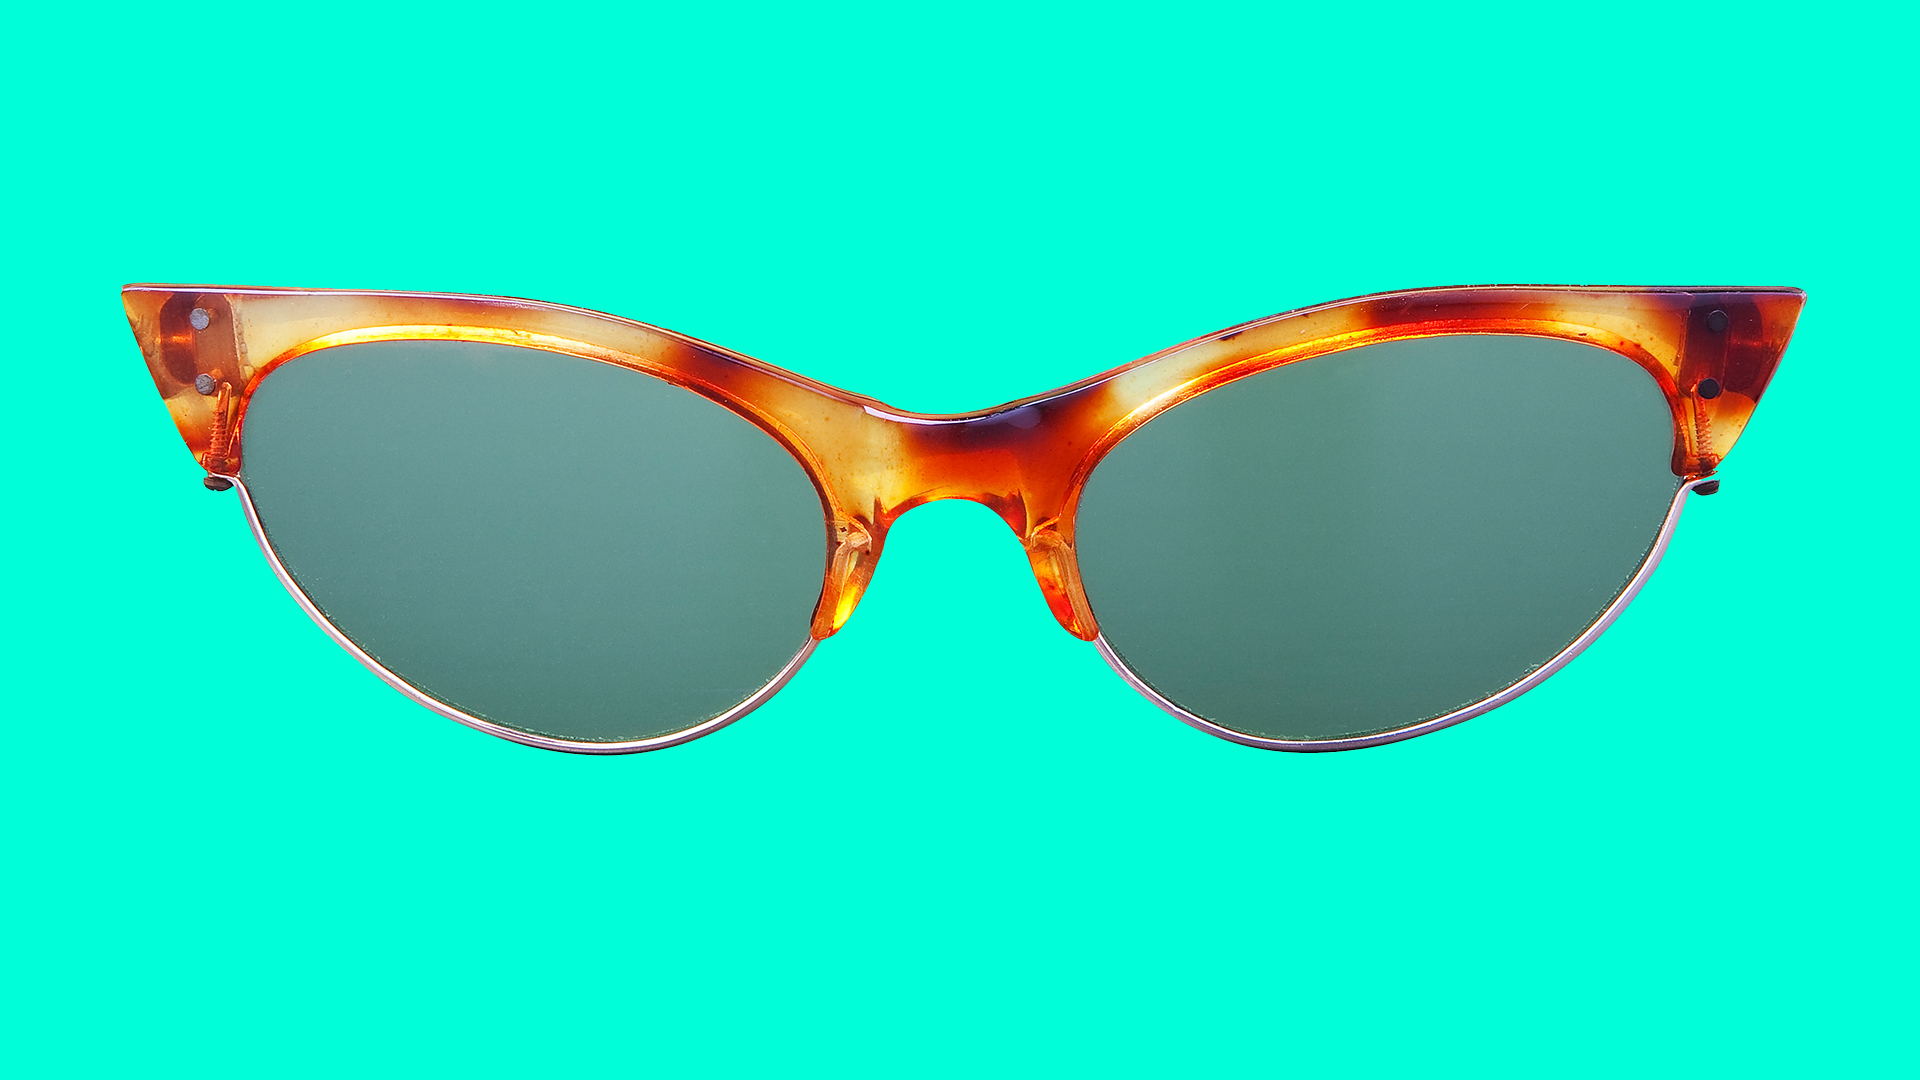 Old-fashioned sunglasses